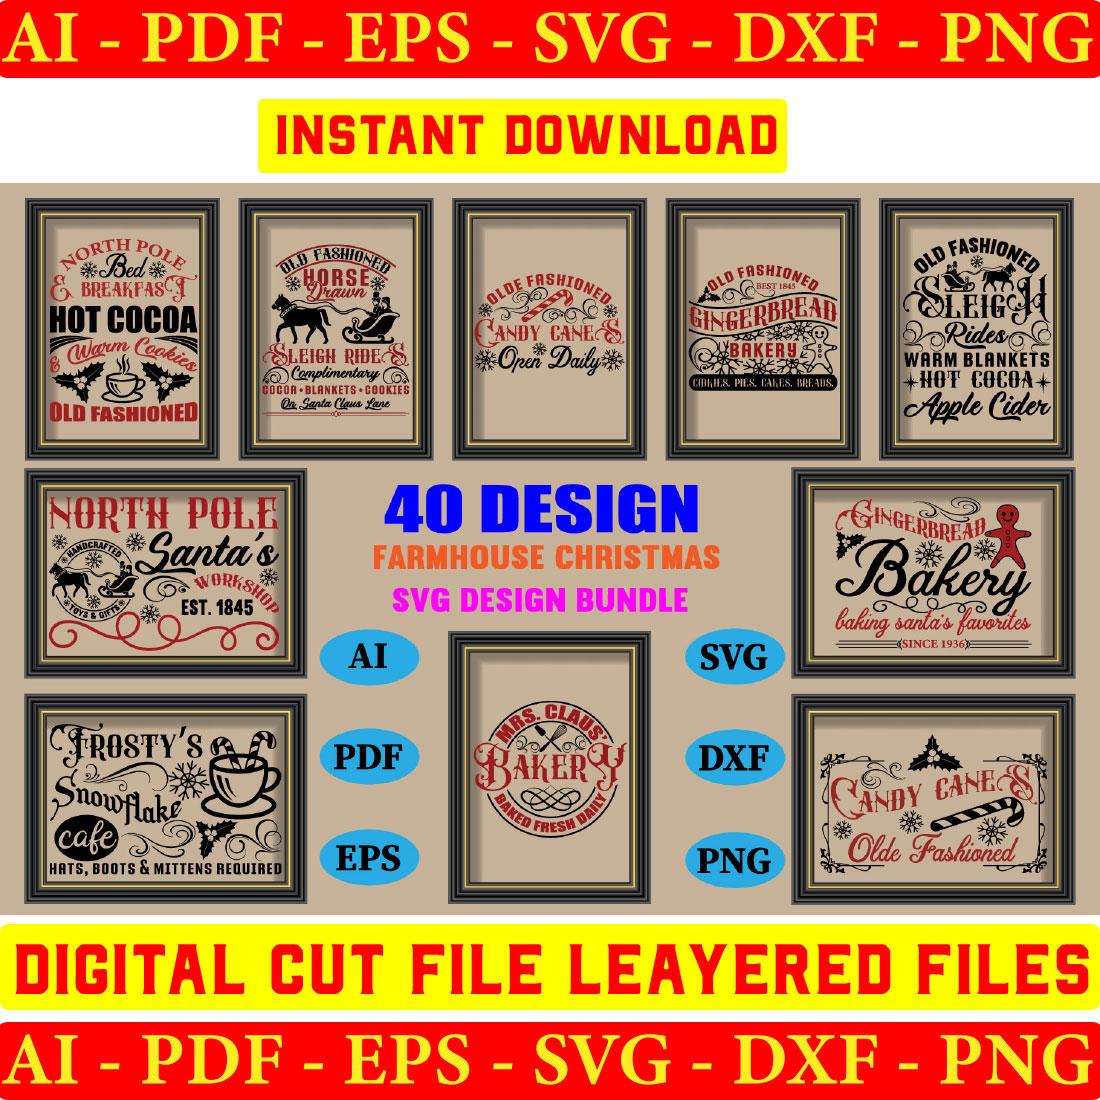 Set of 10 digital cut file layered files.